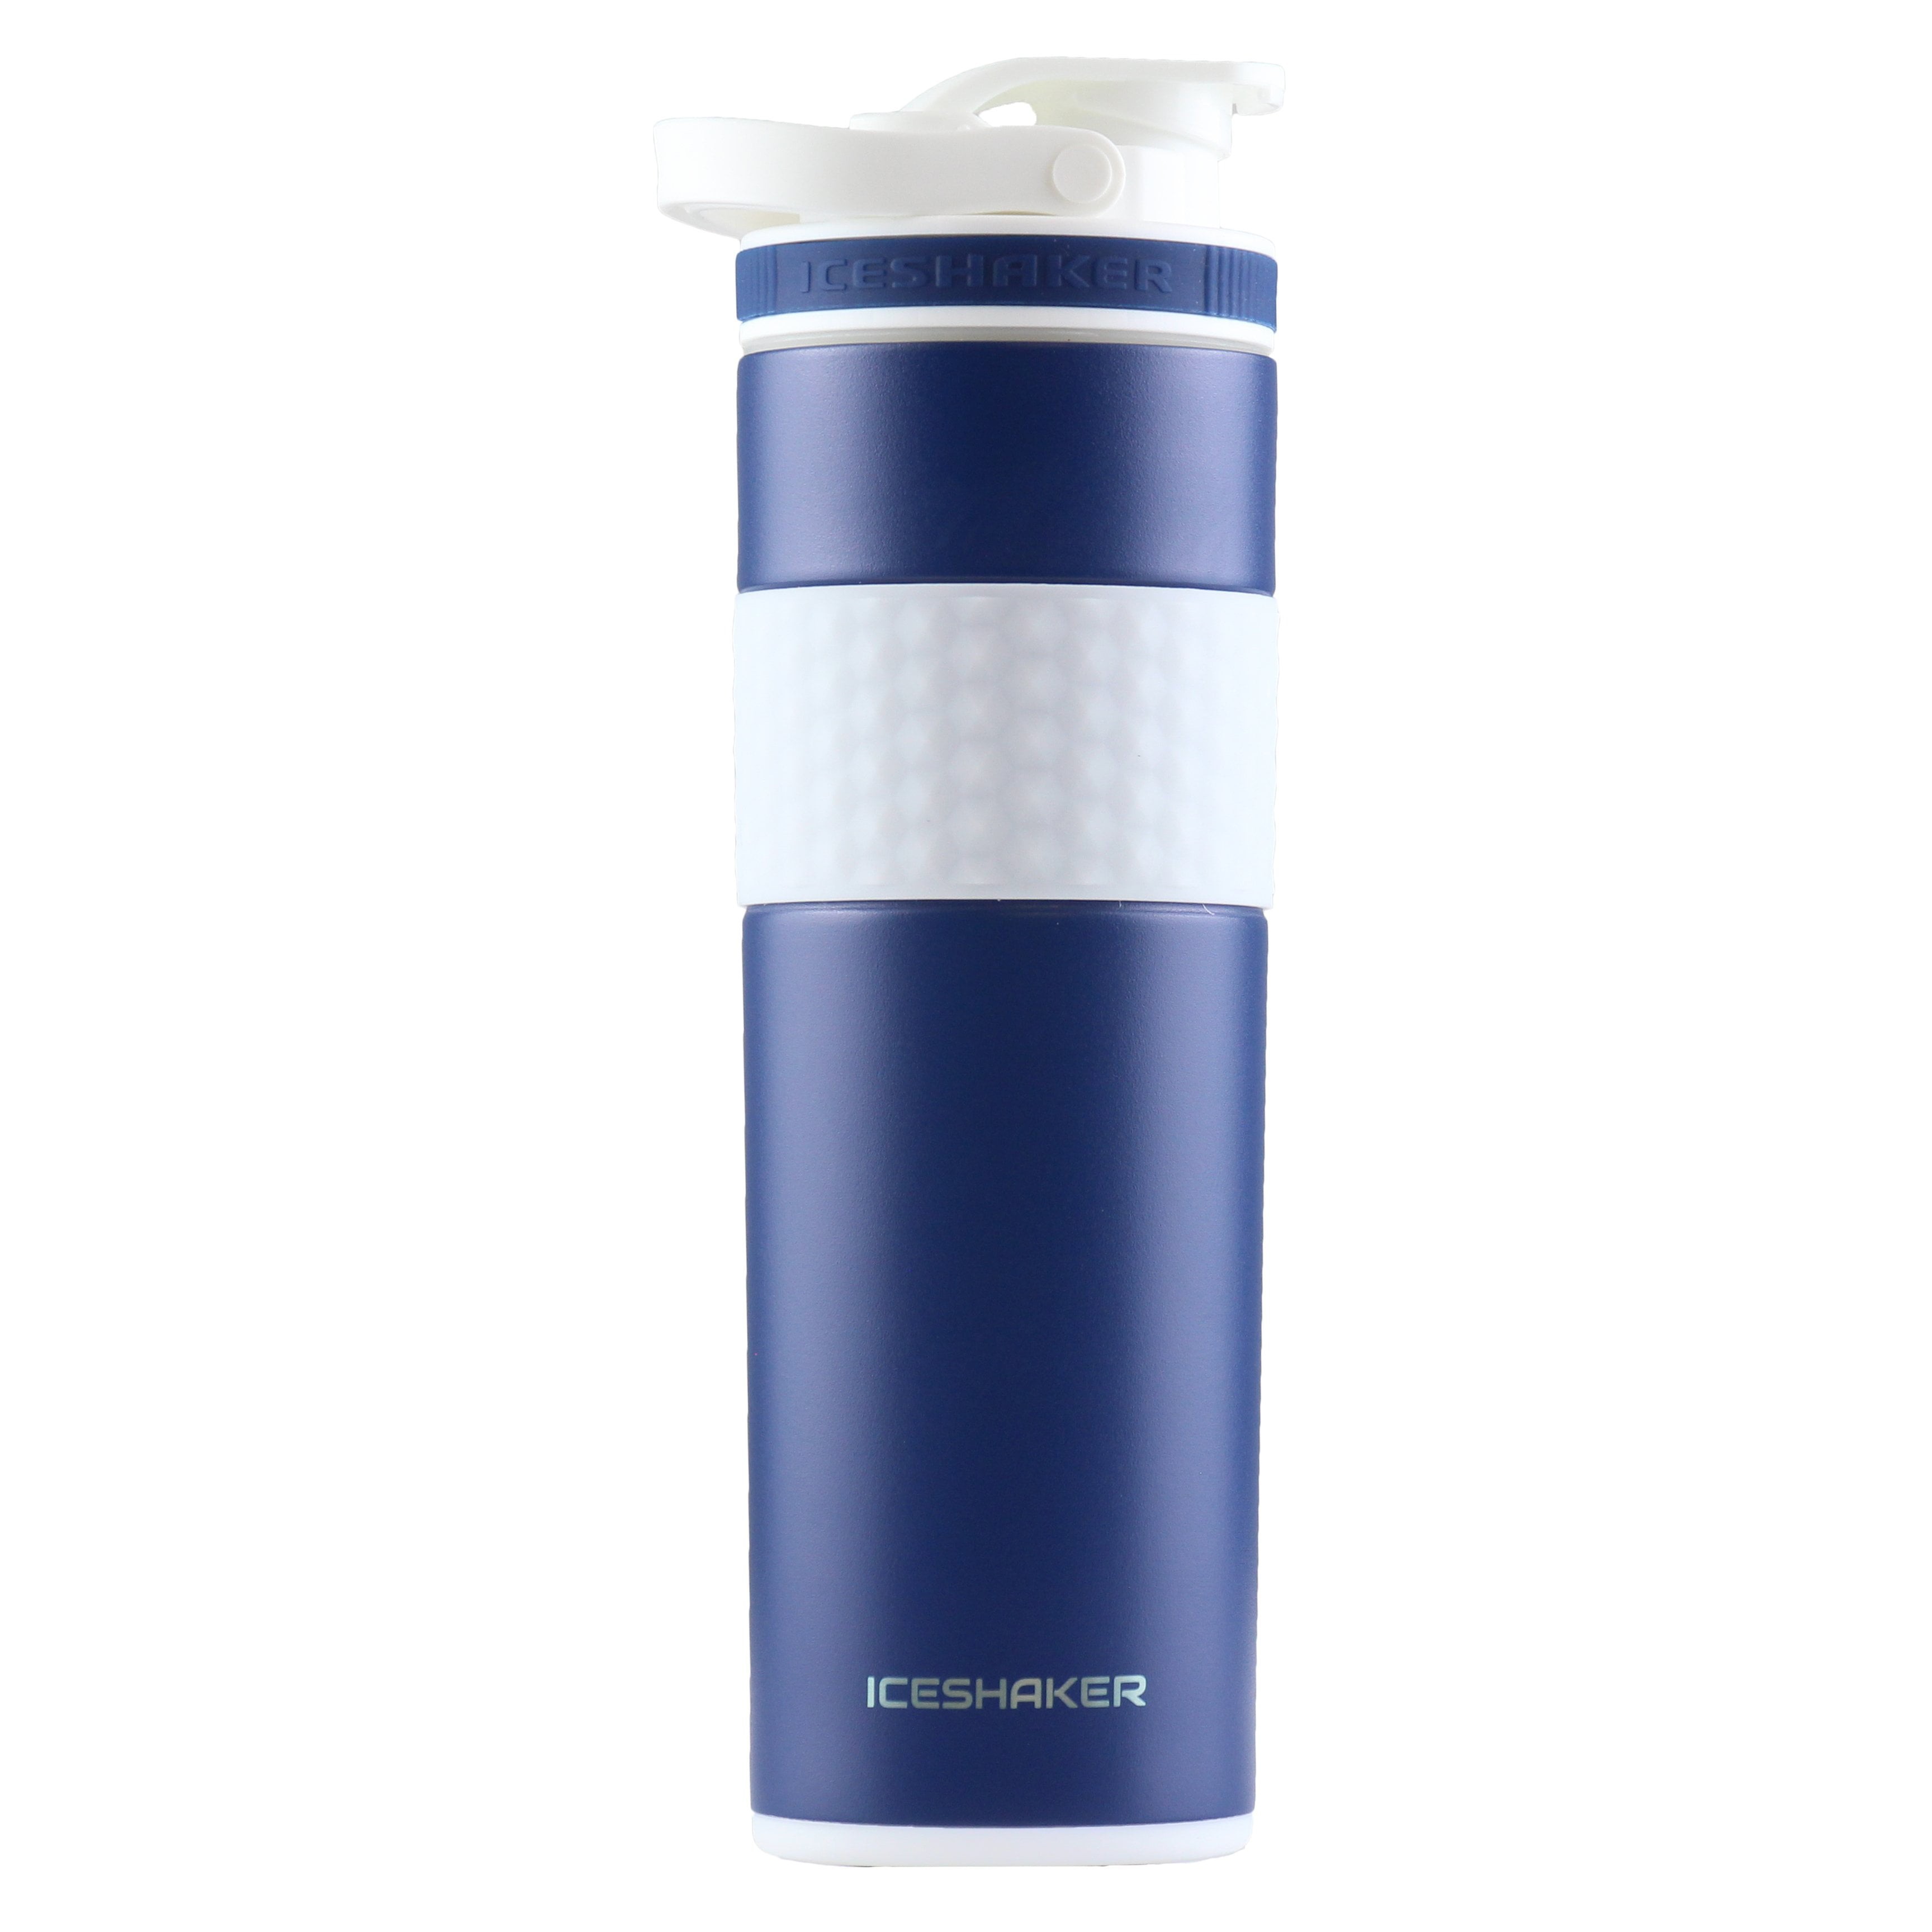 JoyJolt Vacuum Insulated 32-oz. Water Bottle with Flip Lid & Sport Straw Lid, Grey